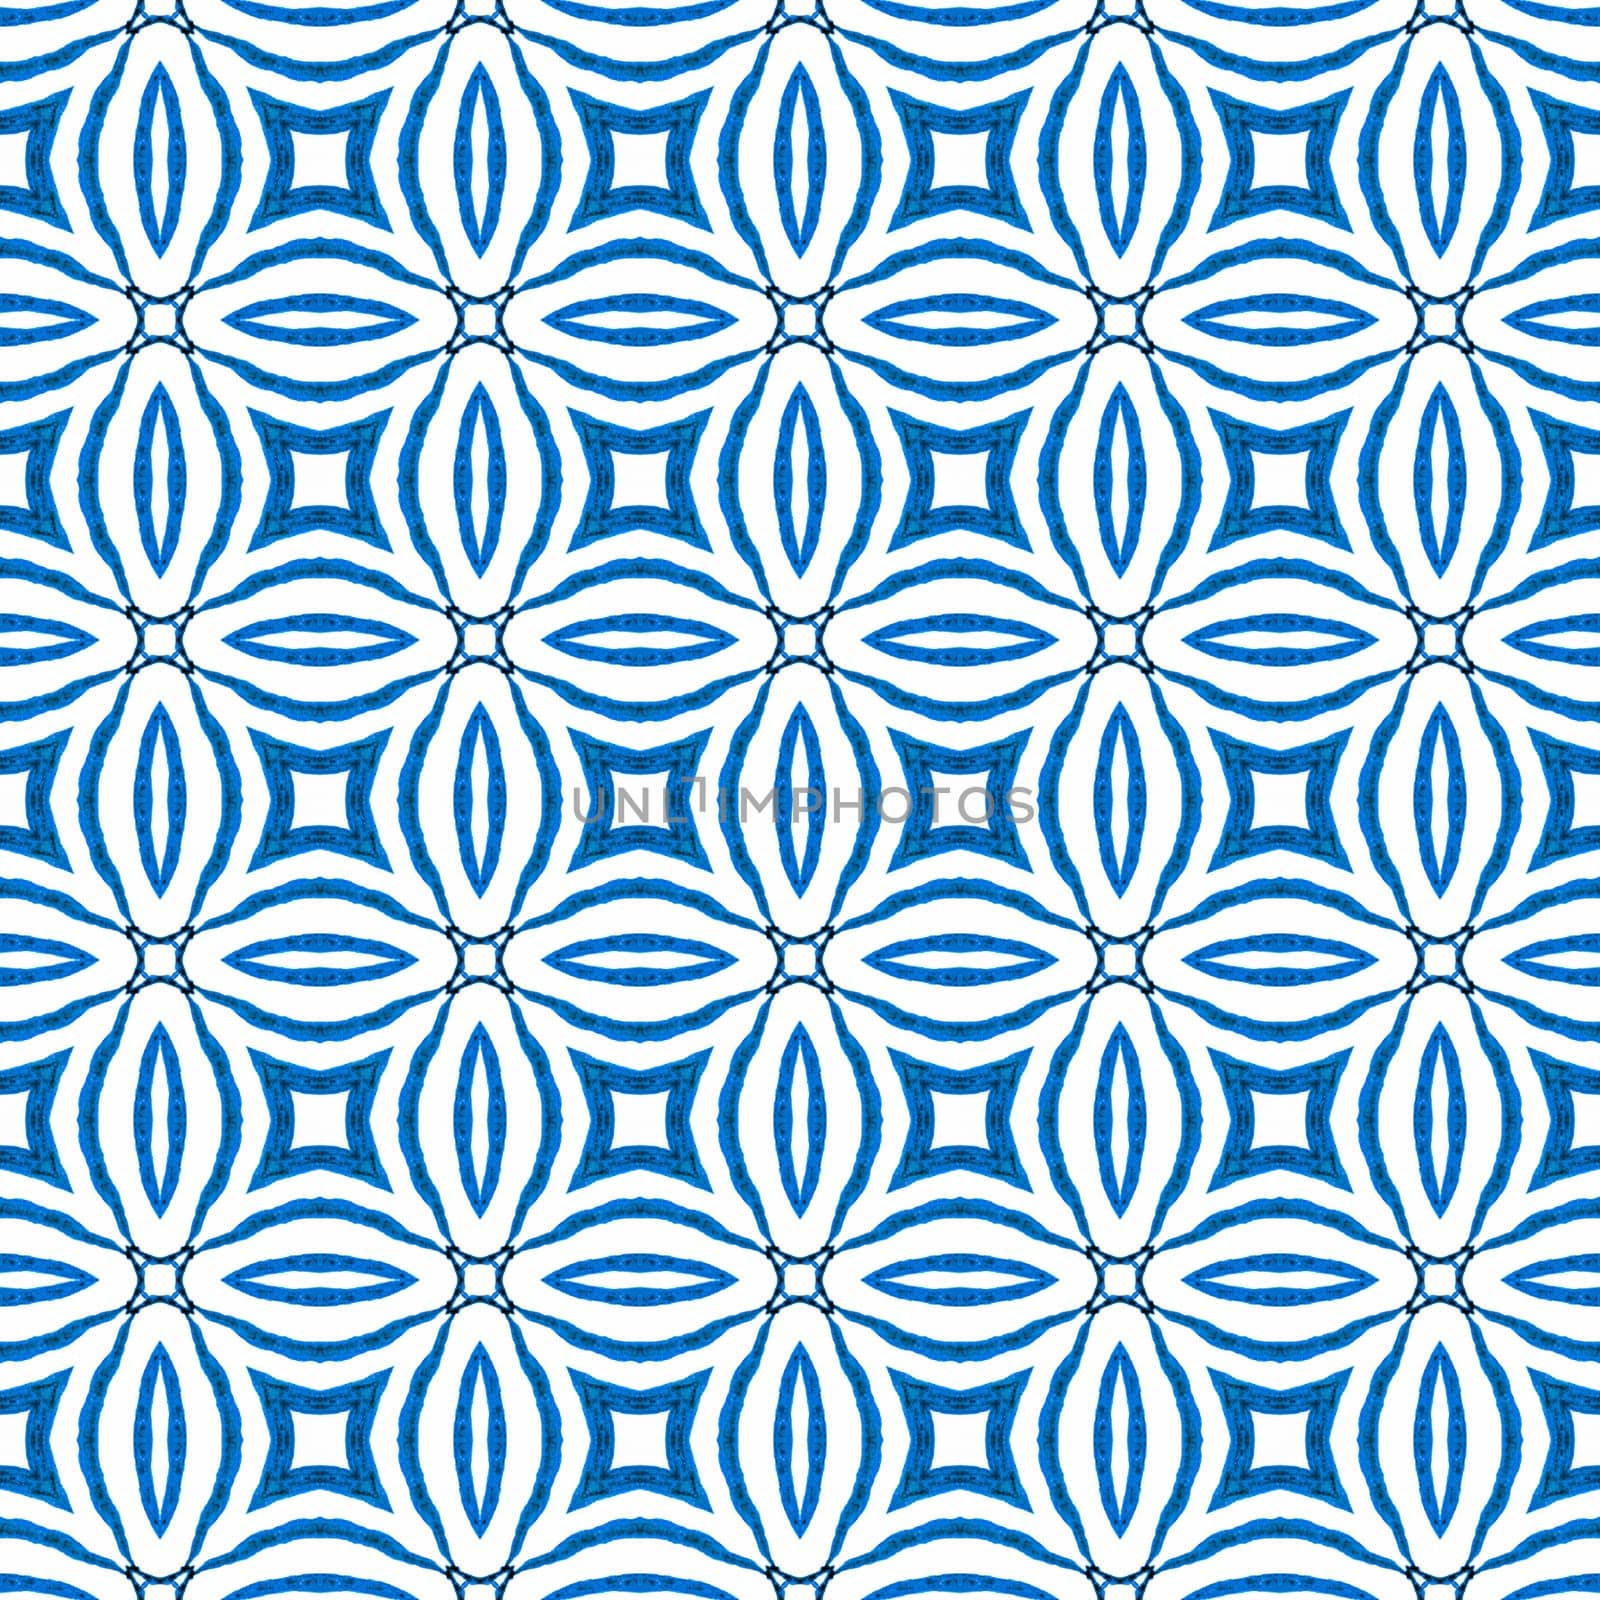 Textile ready powerful print, swimwear fabric, wallpaper, wrapping. Blue fascinating boho chic summer design. Green geometric chevron watercolor border. Chevron watercolor pattern.